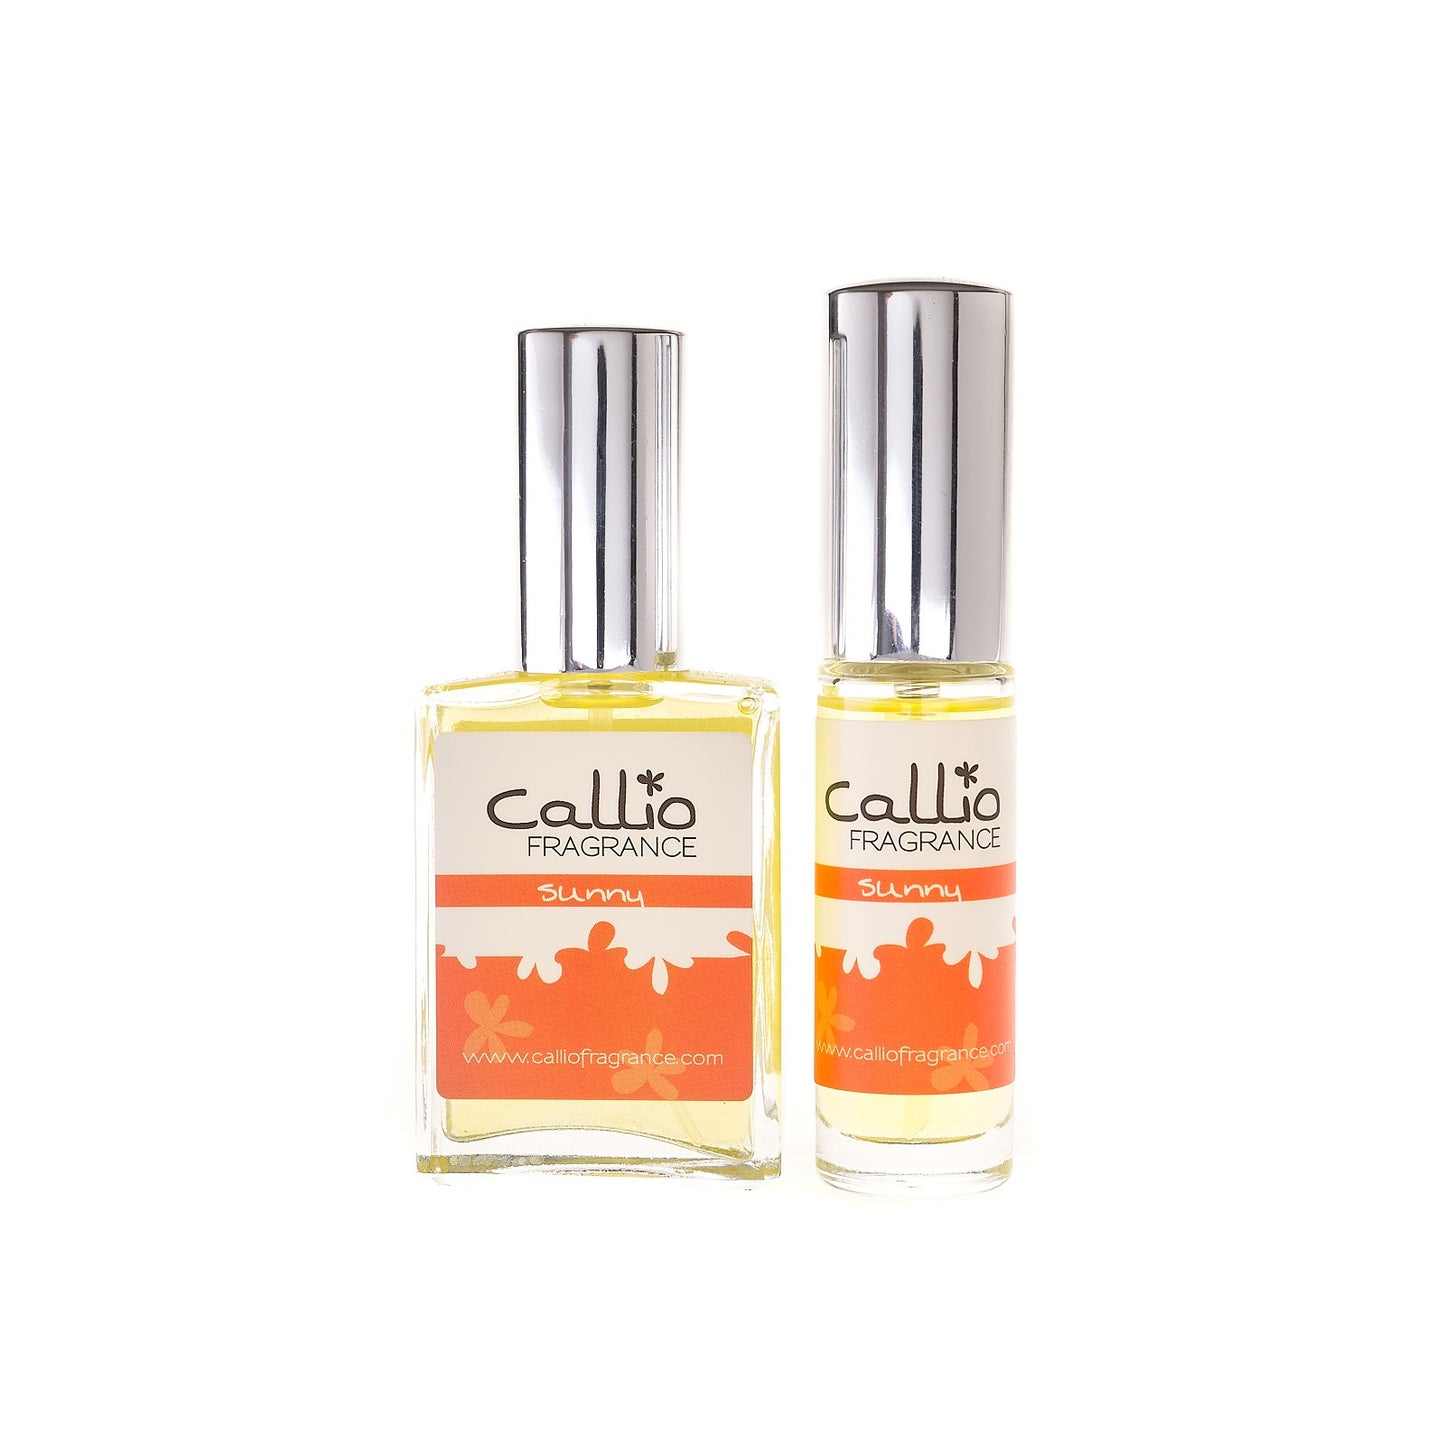 Perfume and Travel Perfume Gift Set - Callio Fragrance